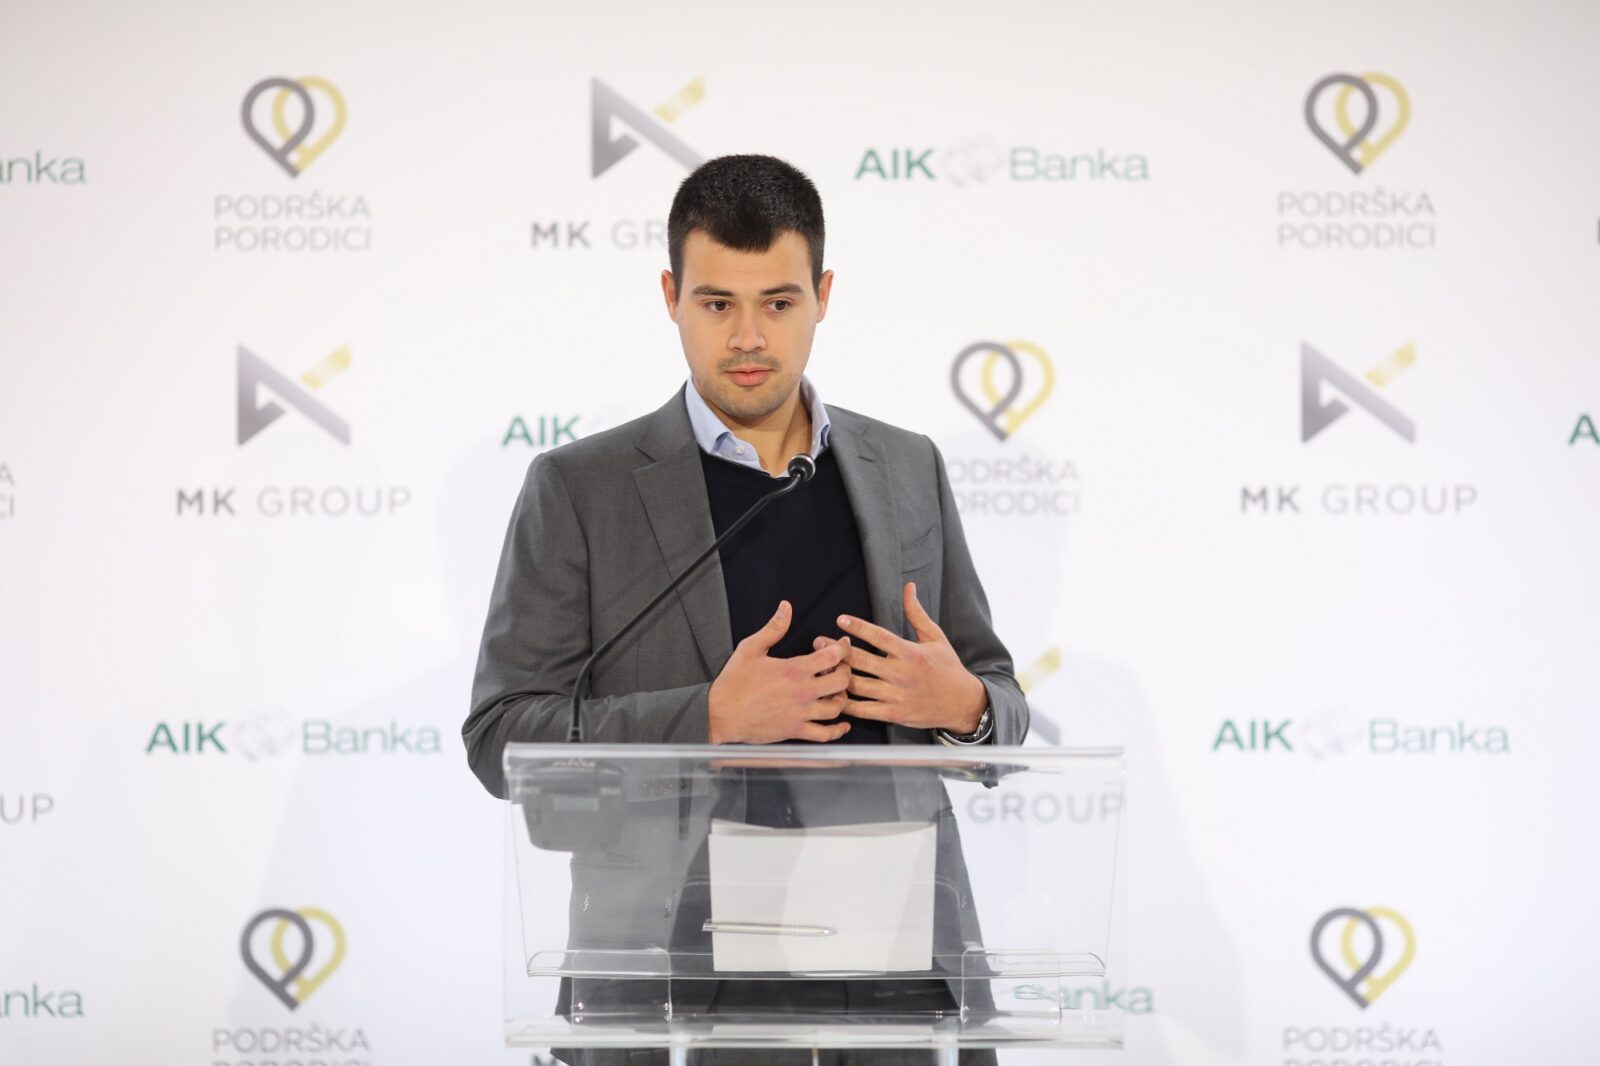 MK_PR_Aleksandar Kostić, potpredsjednik MK Group_02